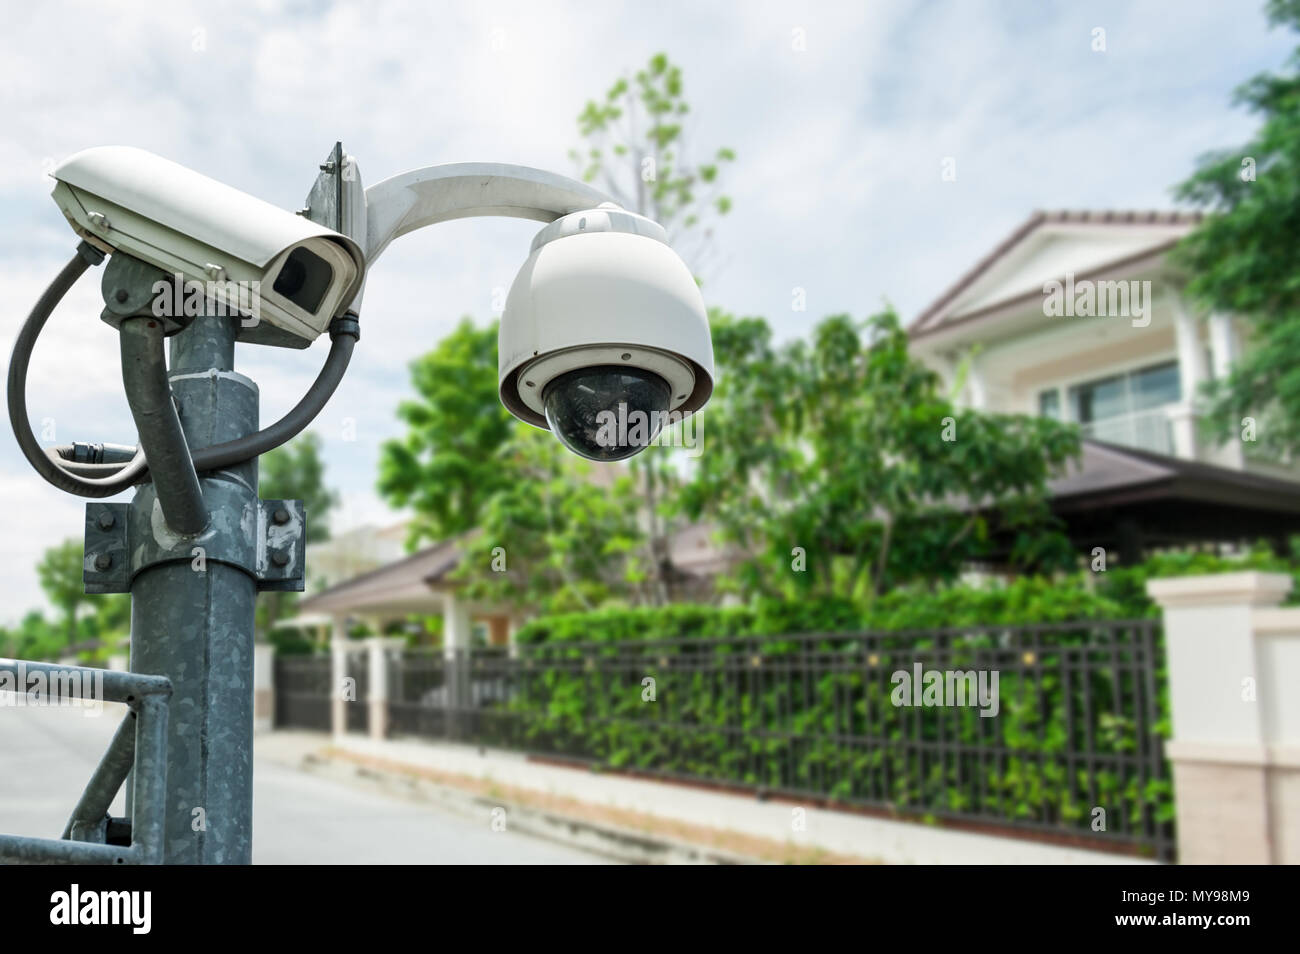 house surveillance camera